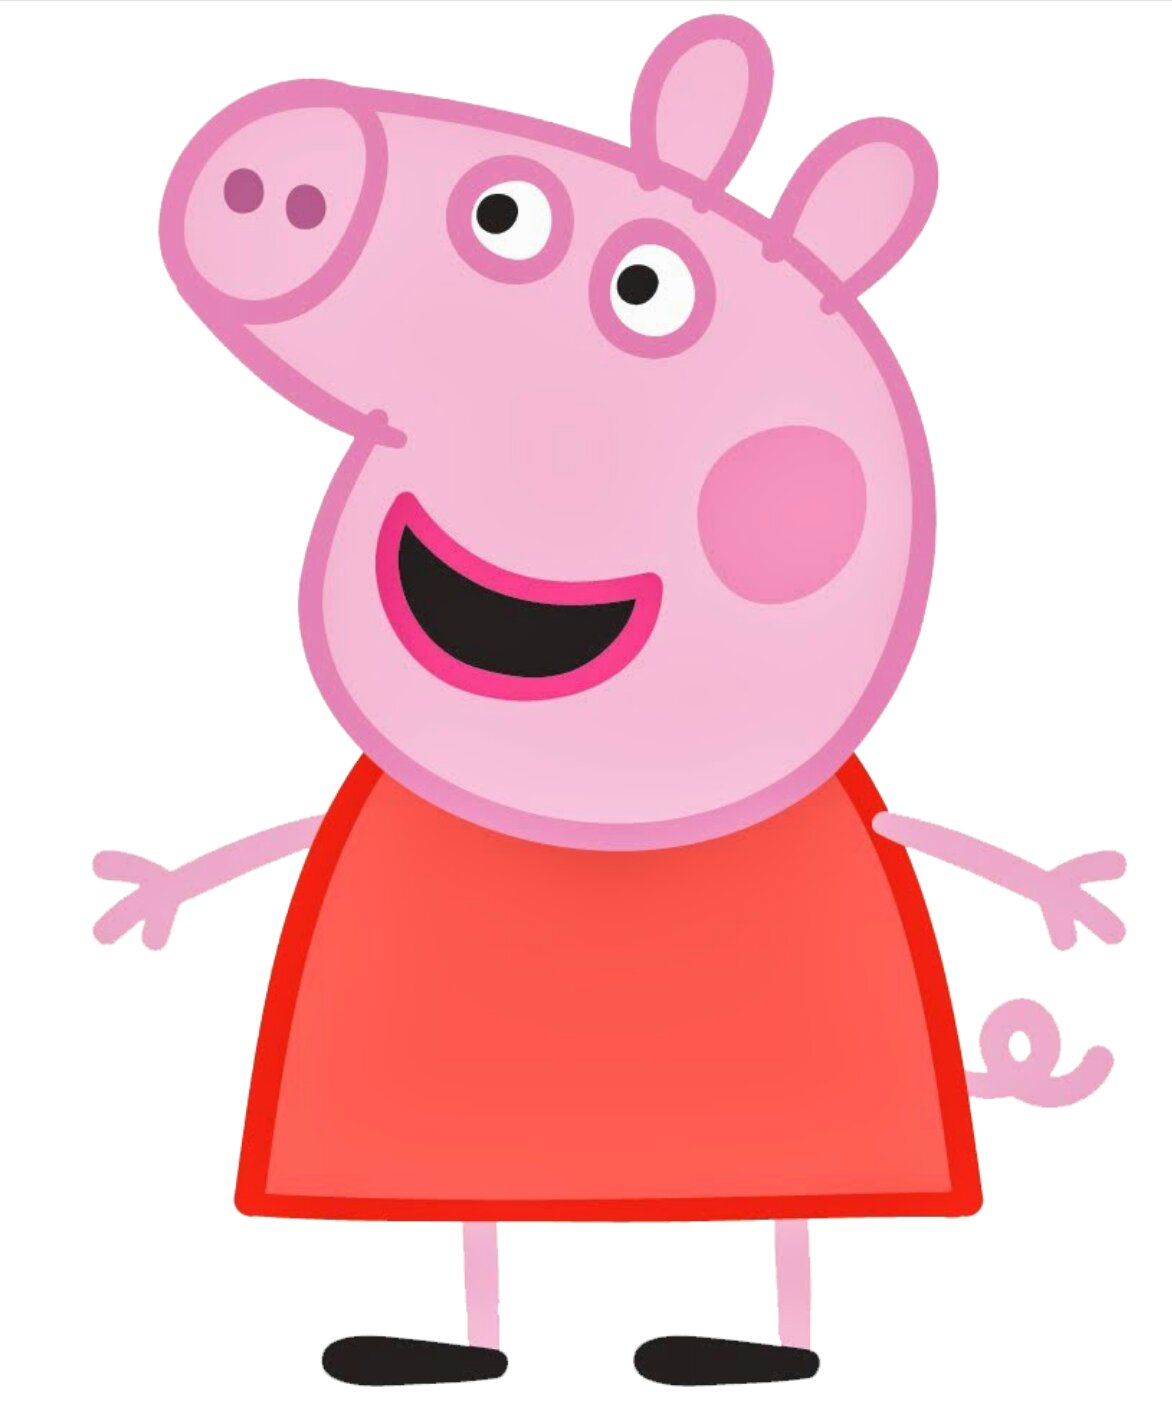 Image - Peppa Pig.png.jpg | Peppa Pig Wiki | Fandom powered by Wikia